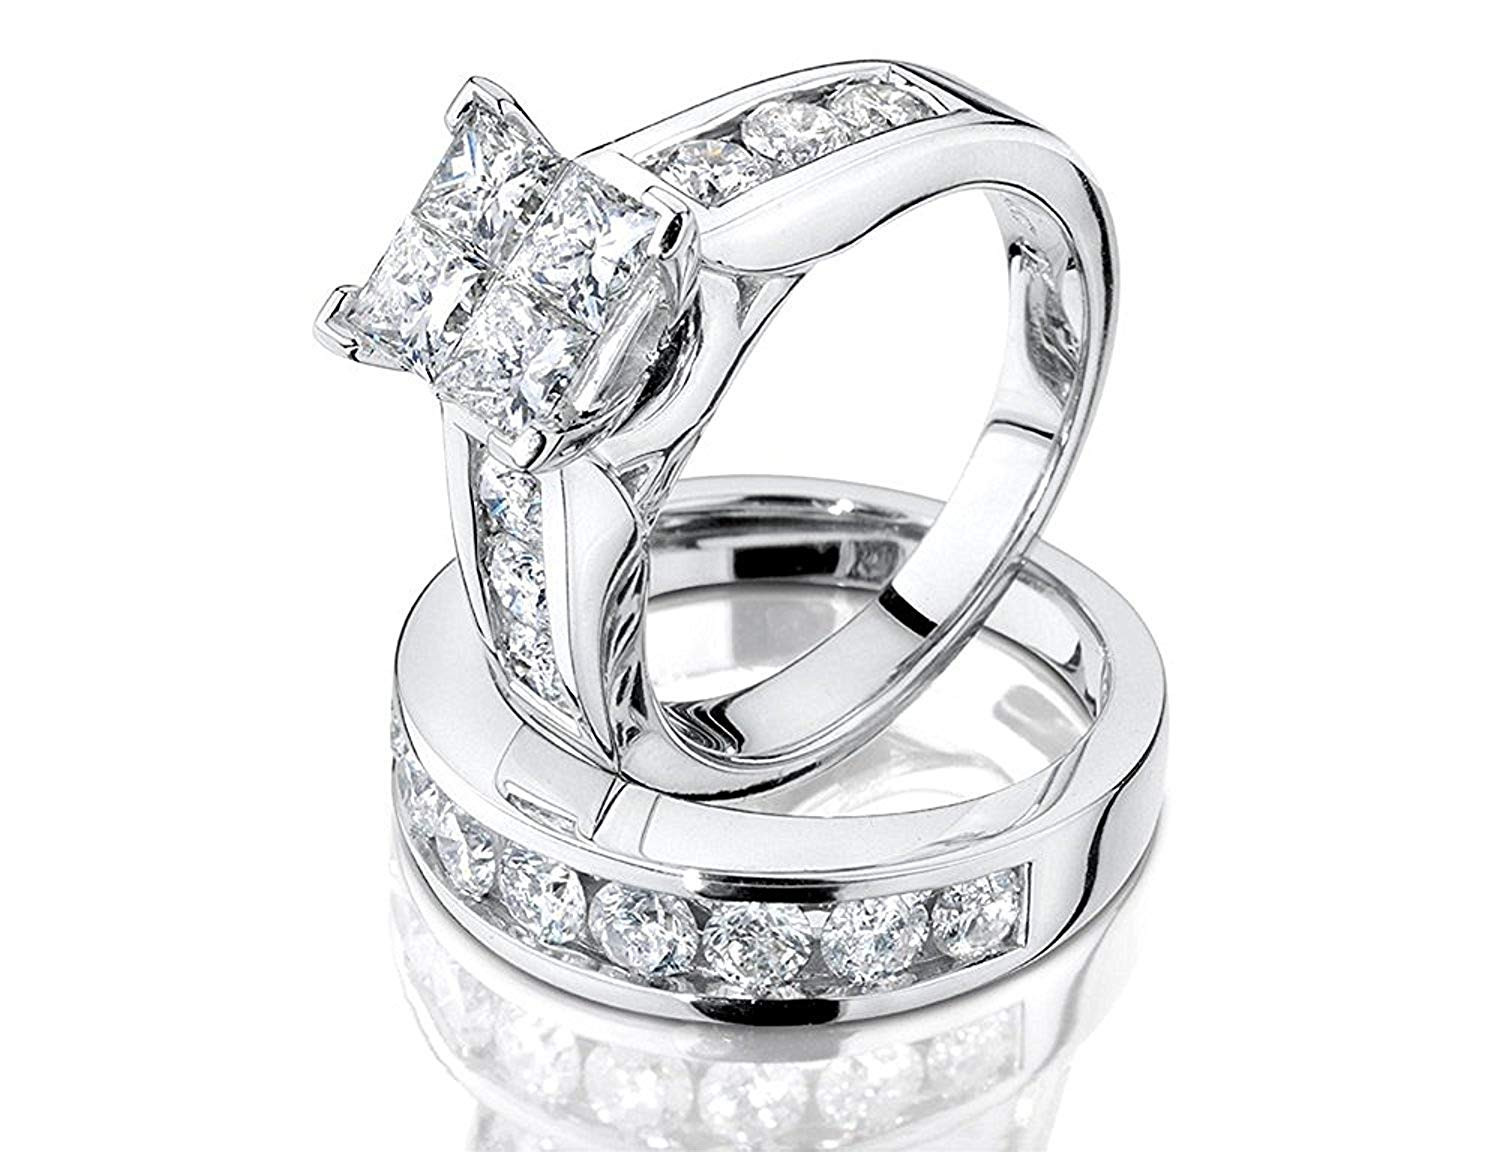 2 Carat Princess Cut Diamond Engagement Ring
 1 2 Carat ctw Princess Cut Diamond Engagement Rings for